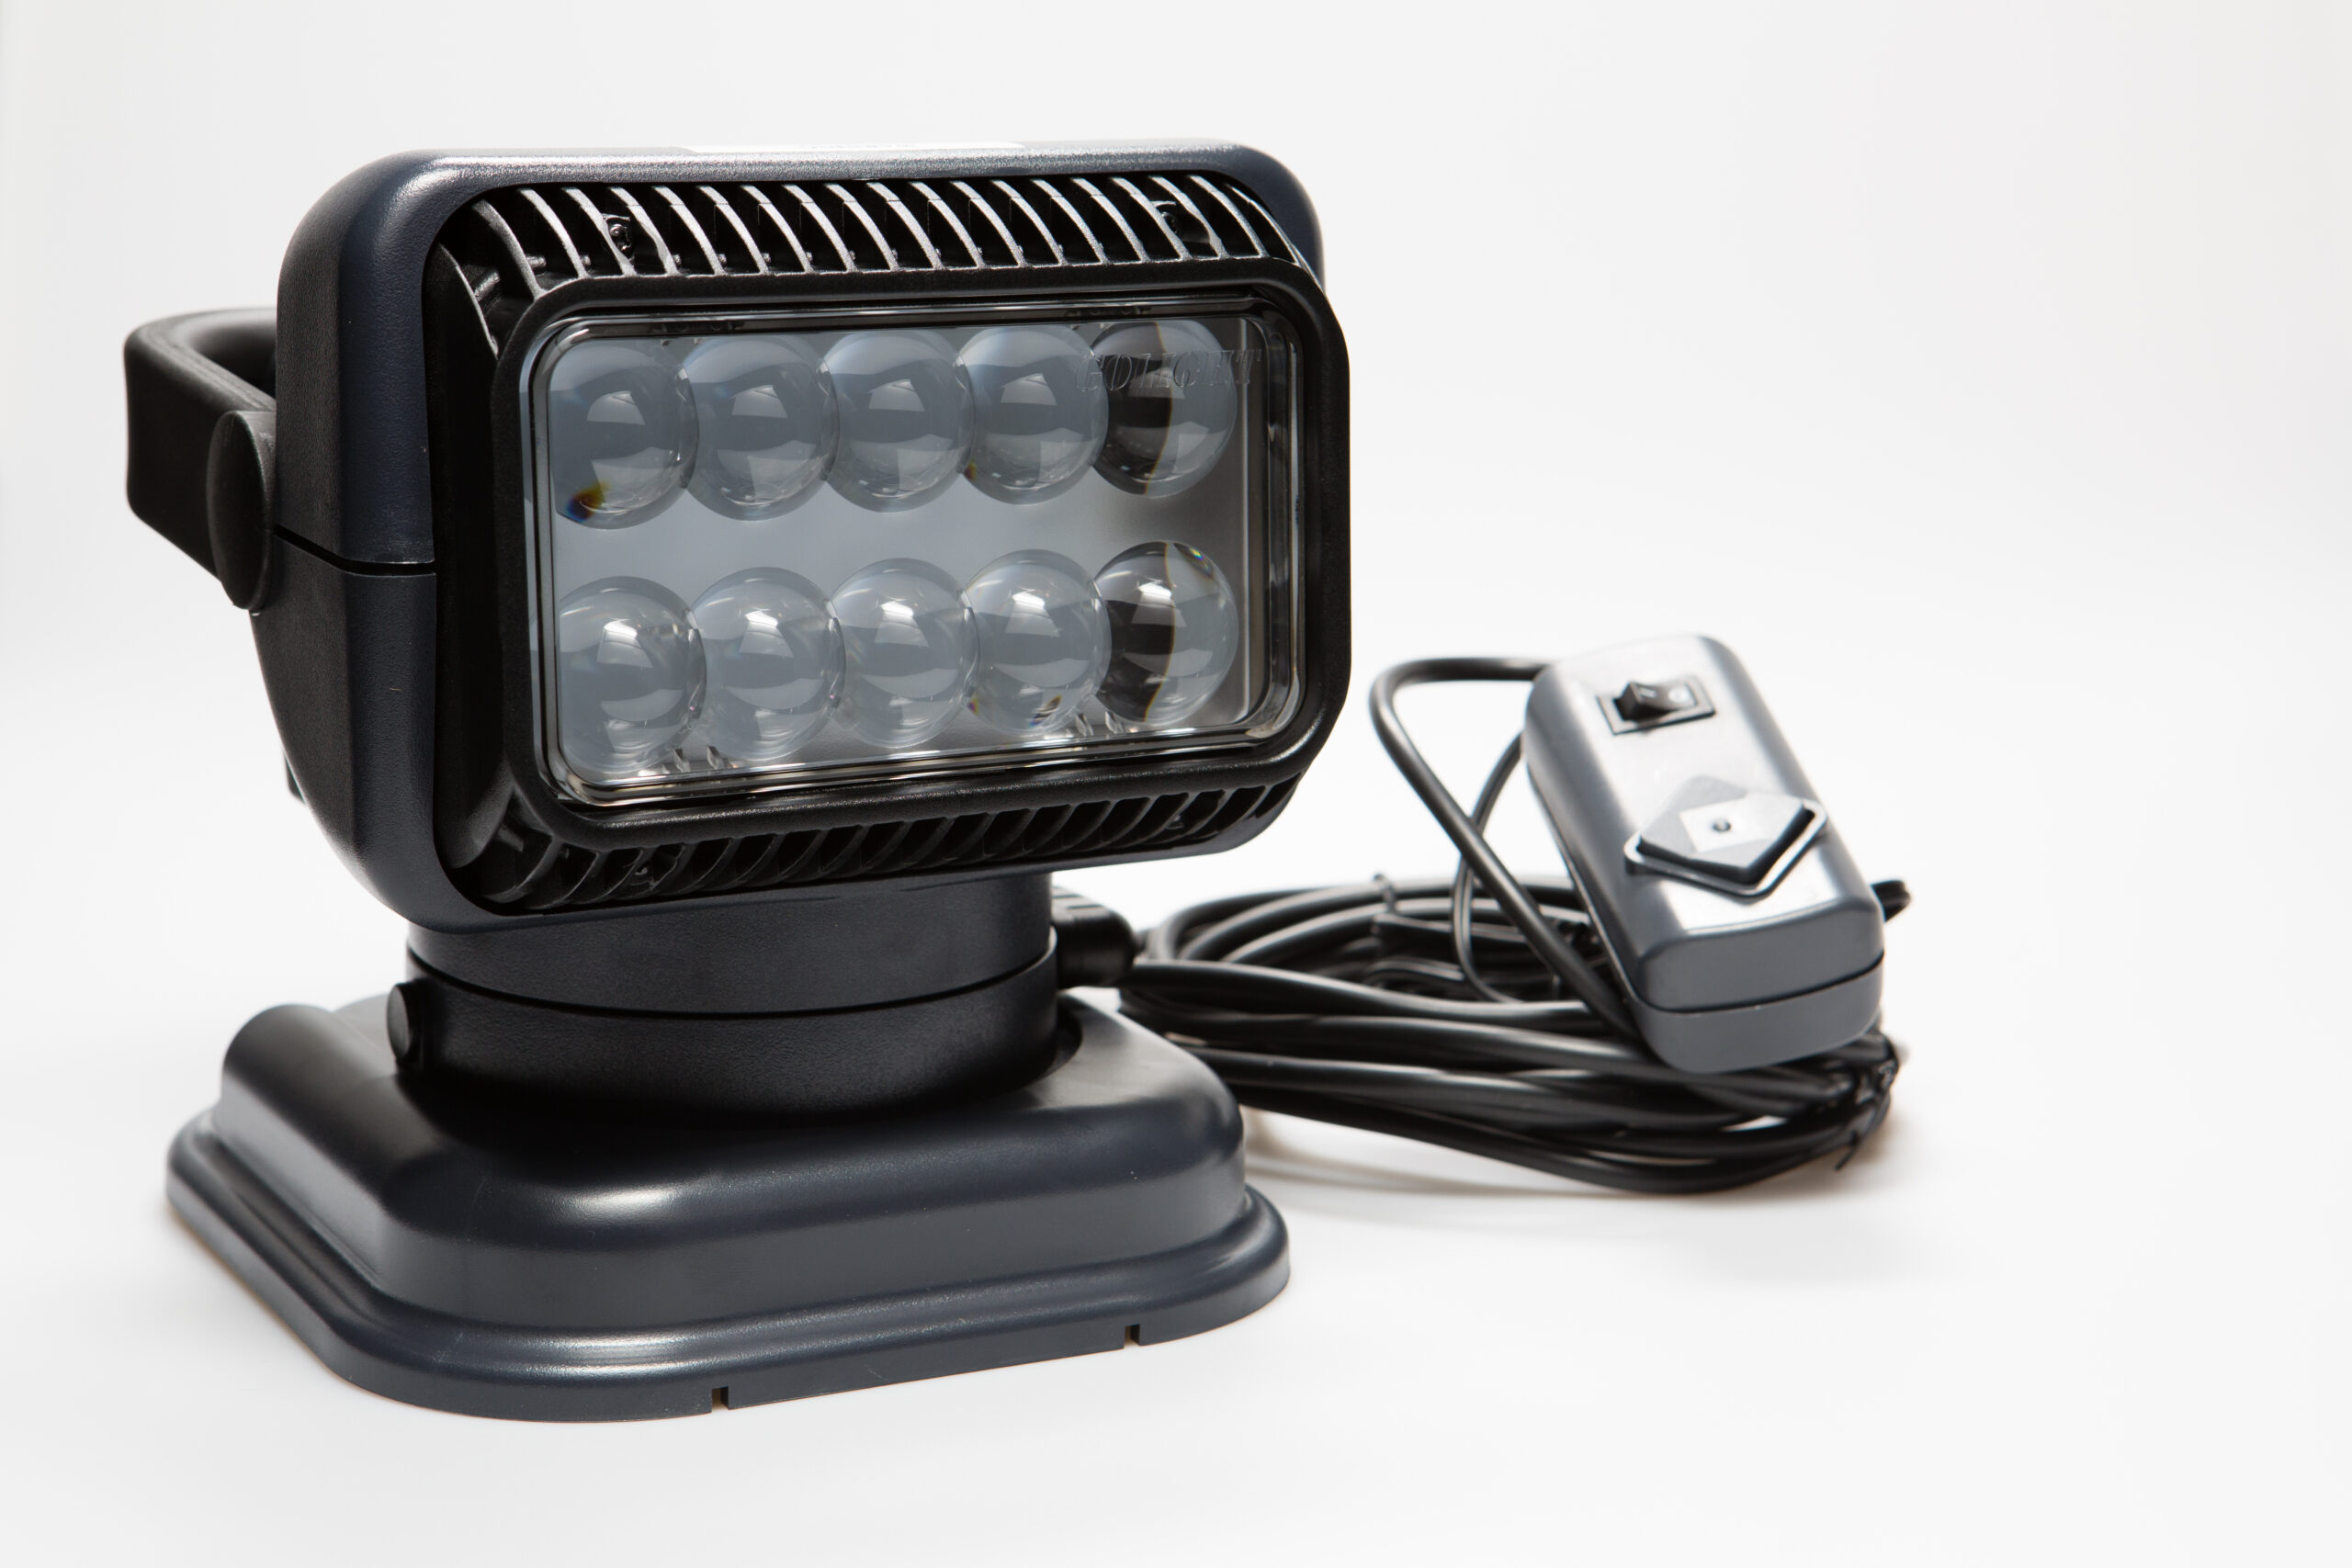 Golight RadioRay Wireless Remote LED Spotlight 